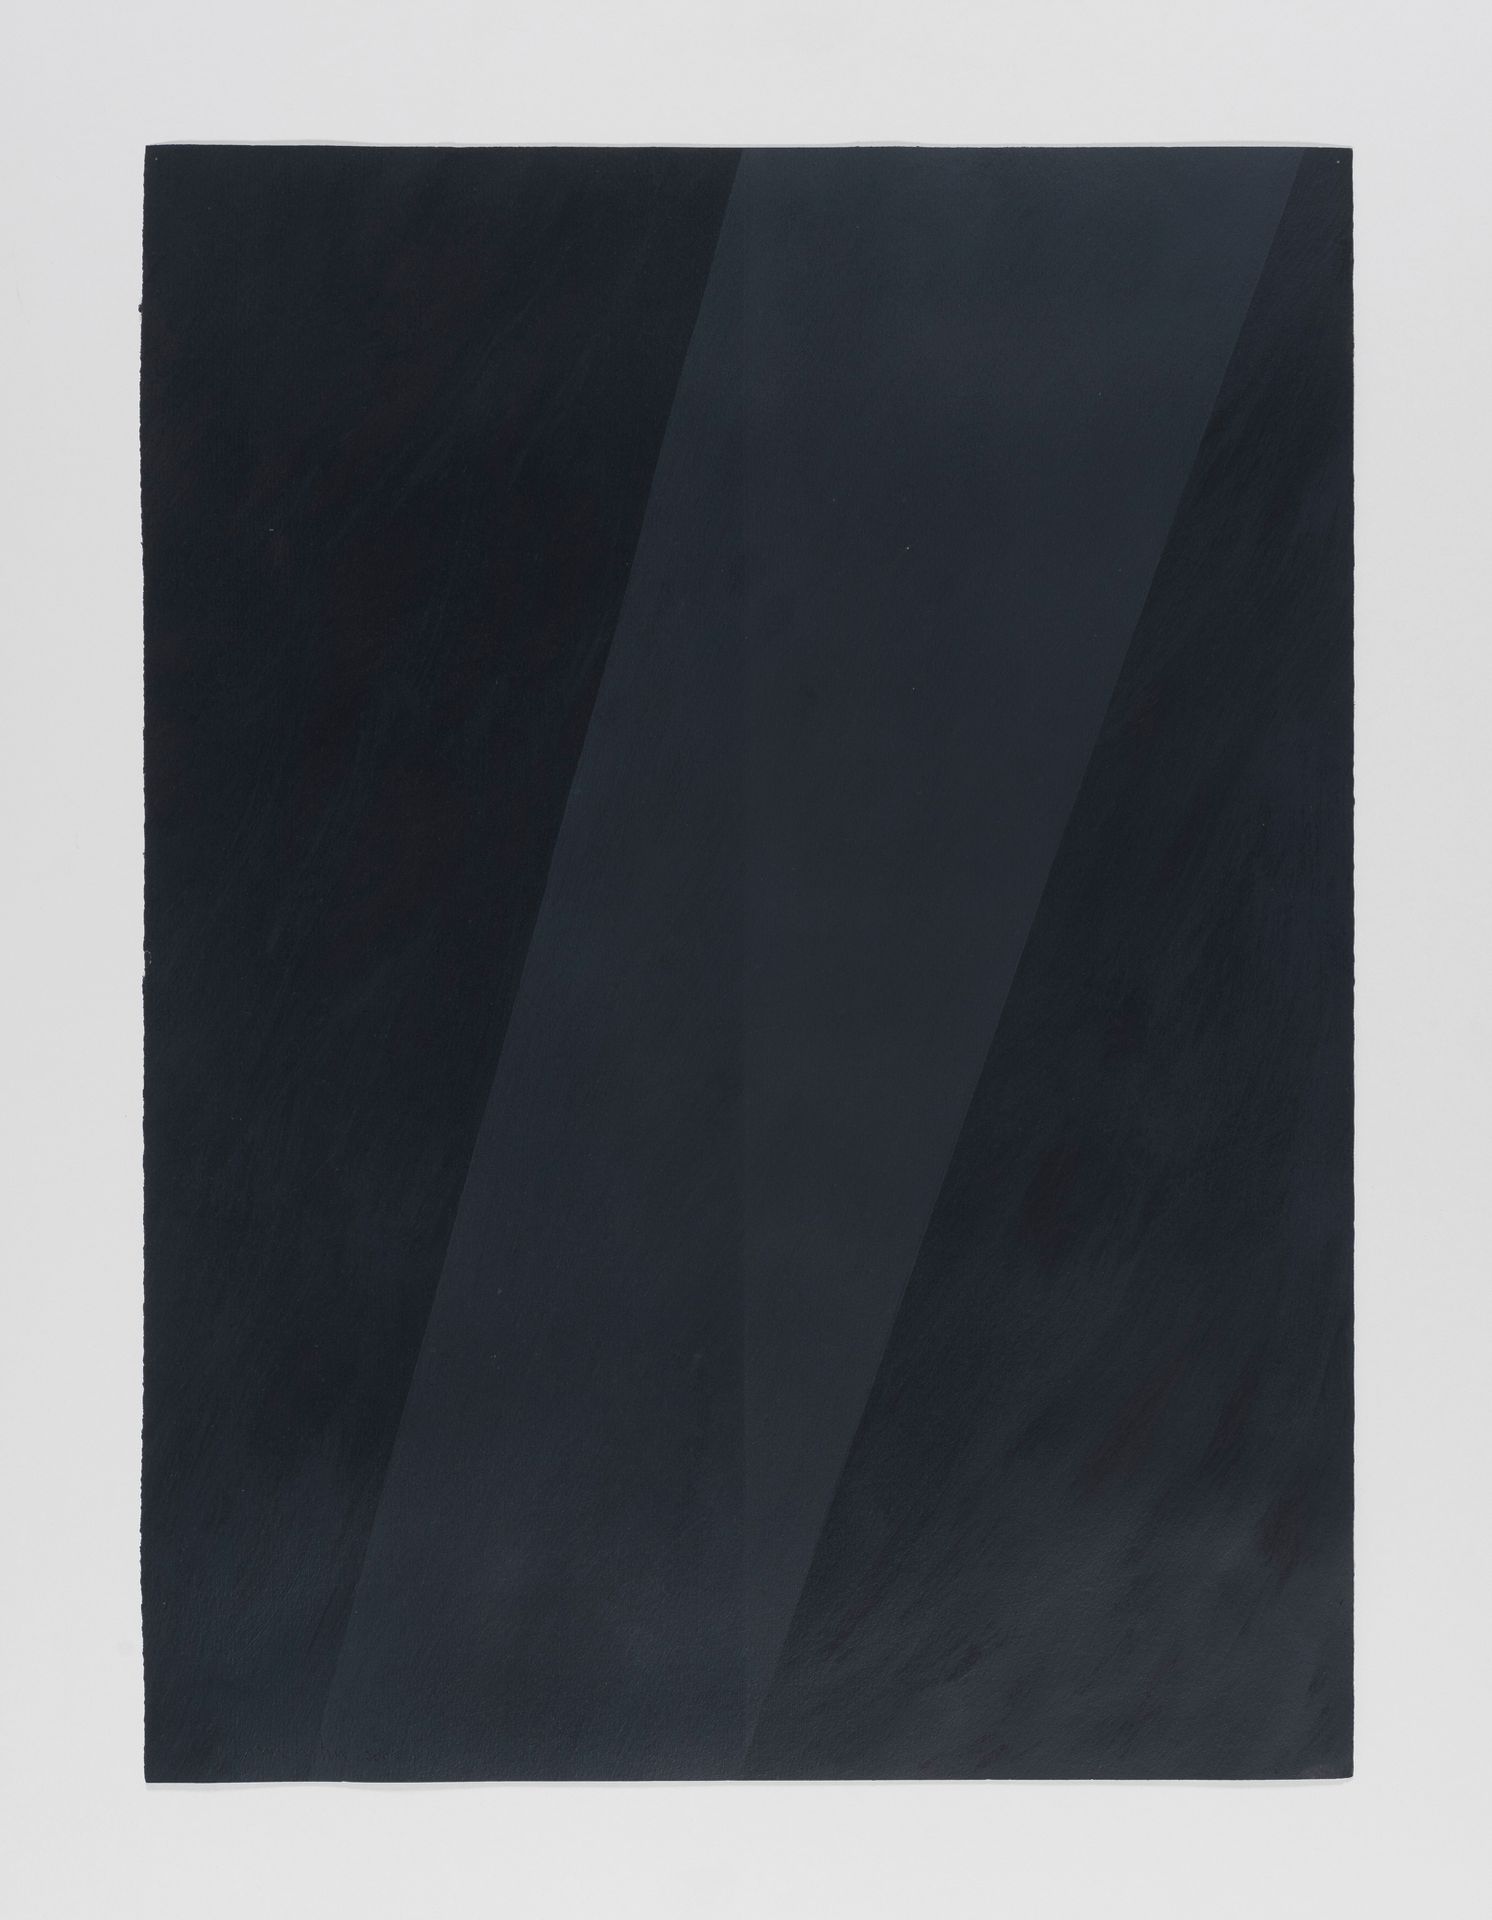 GILBERT SWIMBERGHE (1927-2015) 无题，2001年。
纸上油画。
左下方有签名和日期。
Olieverf op papier。
Li&hellip;